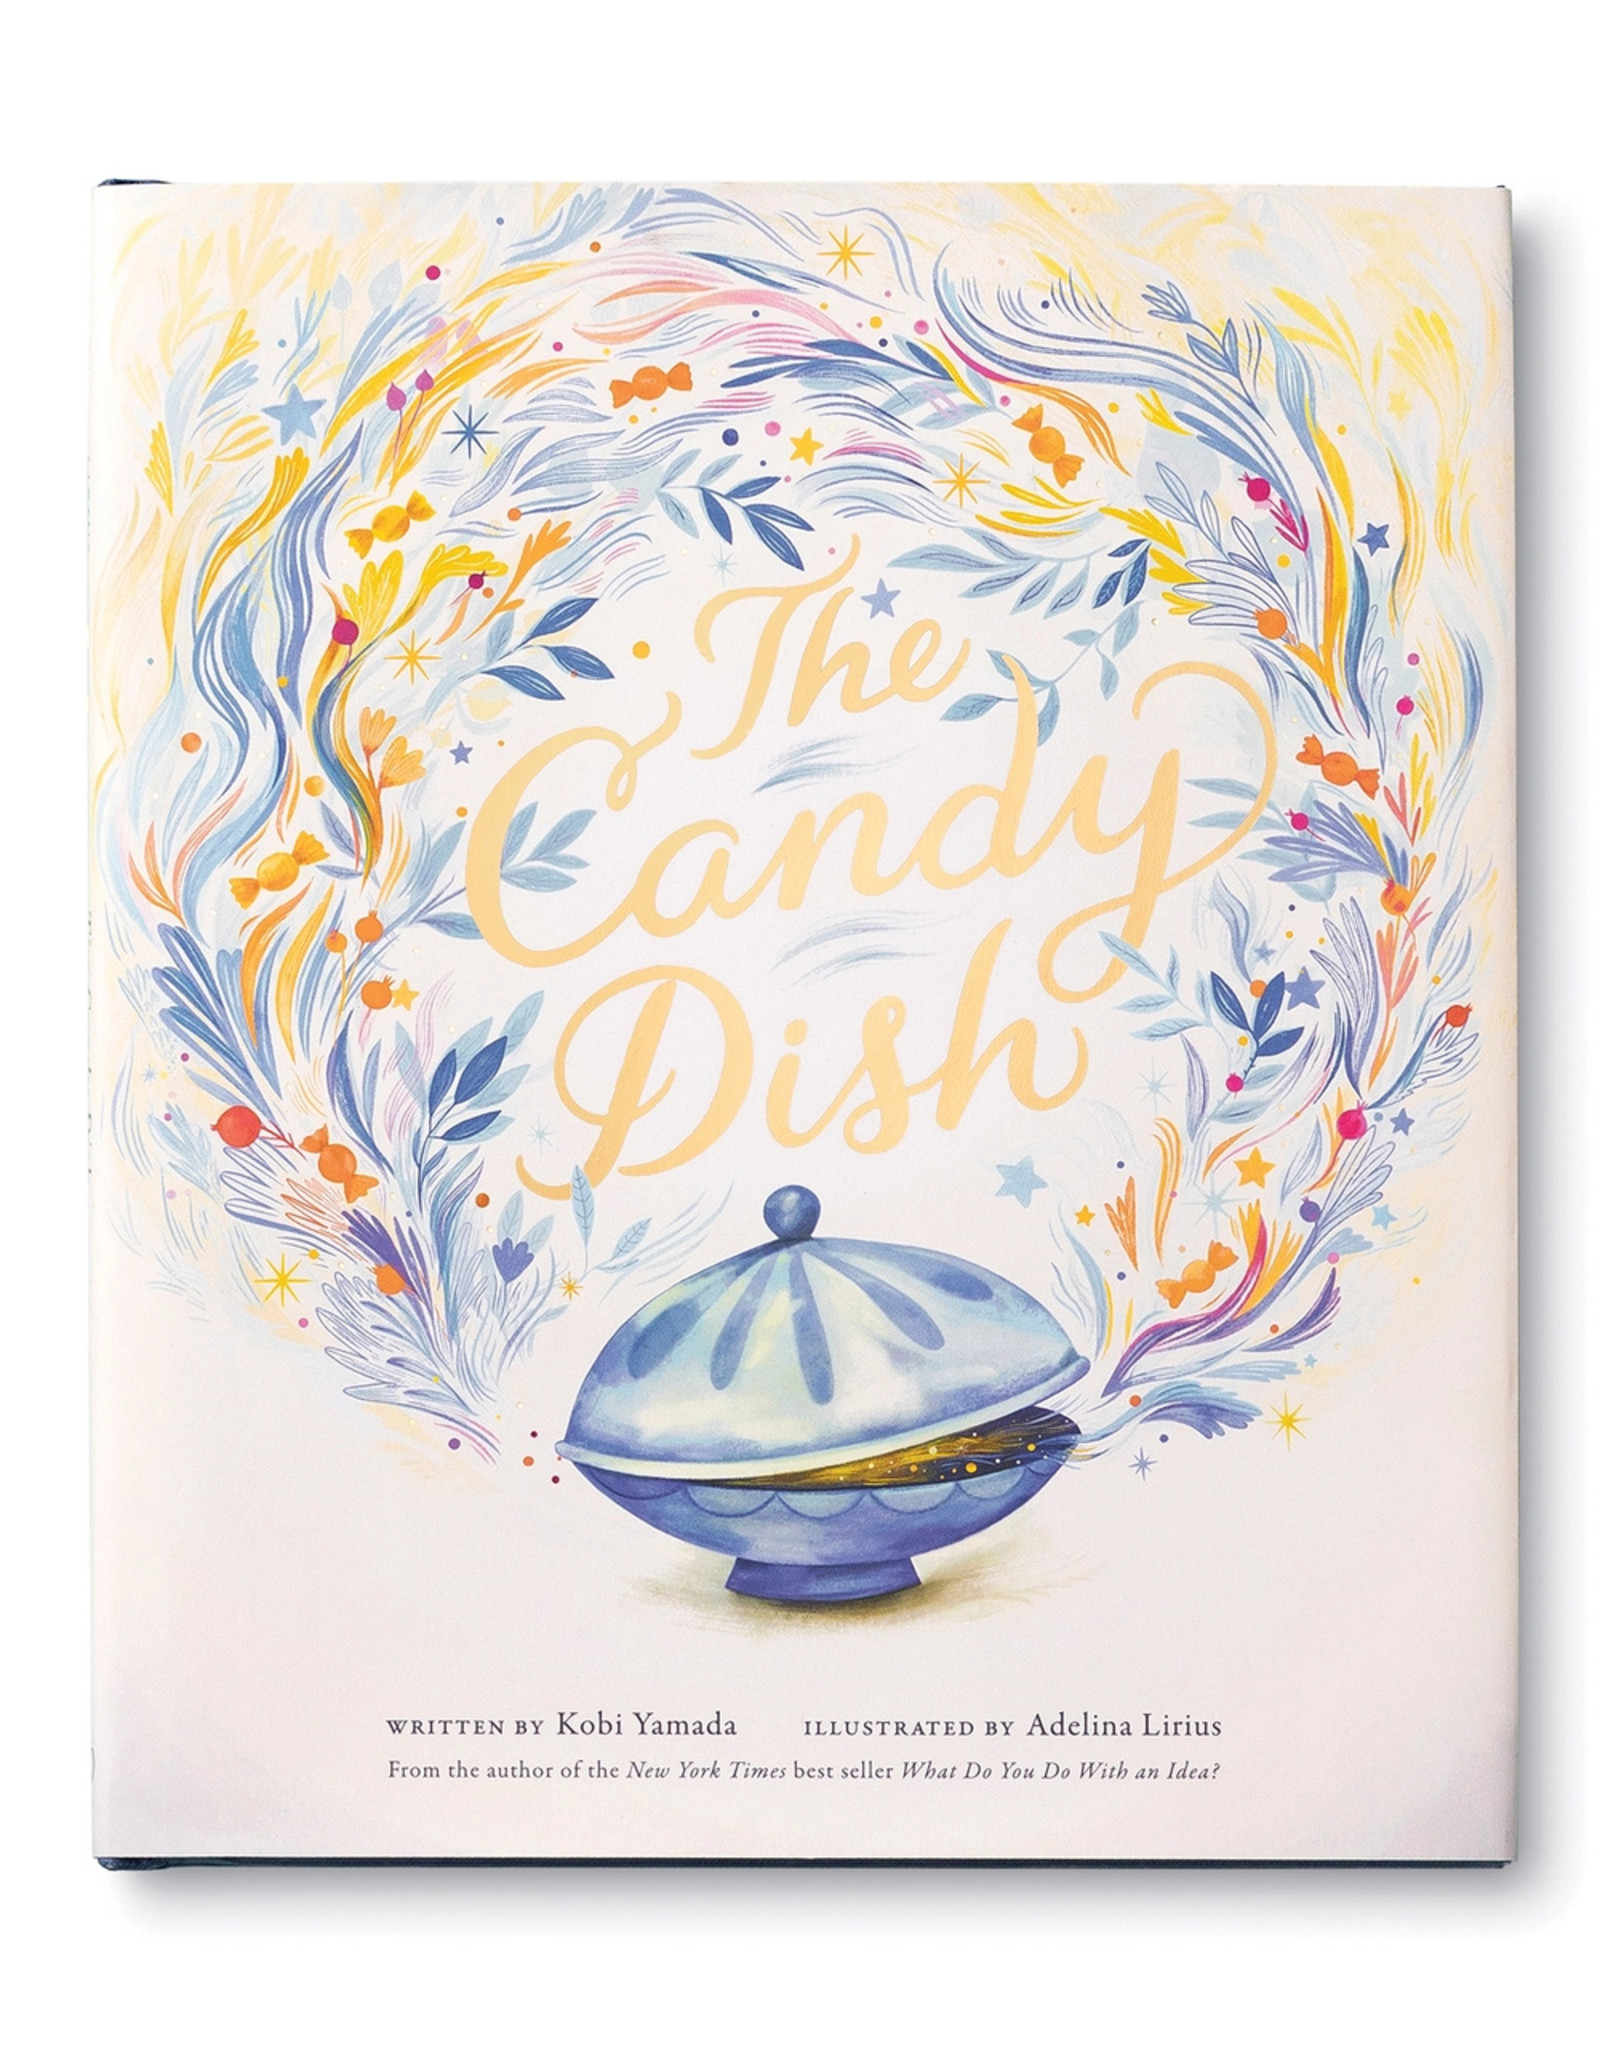 Compendium Book - The Candy Dish - Kobi Yamada